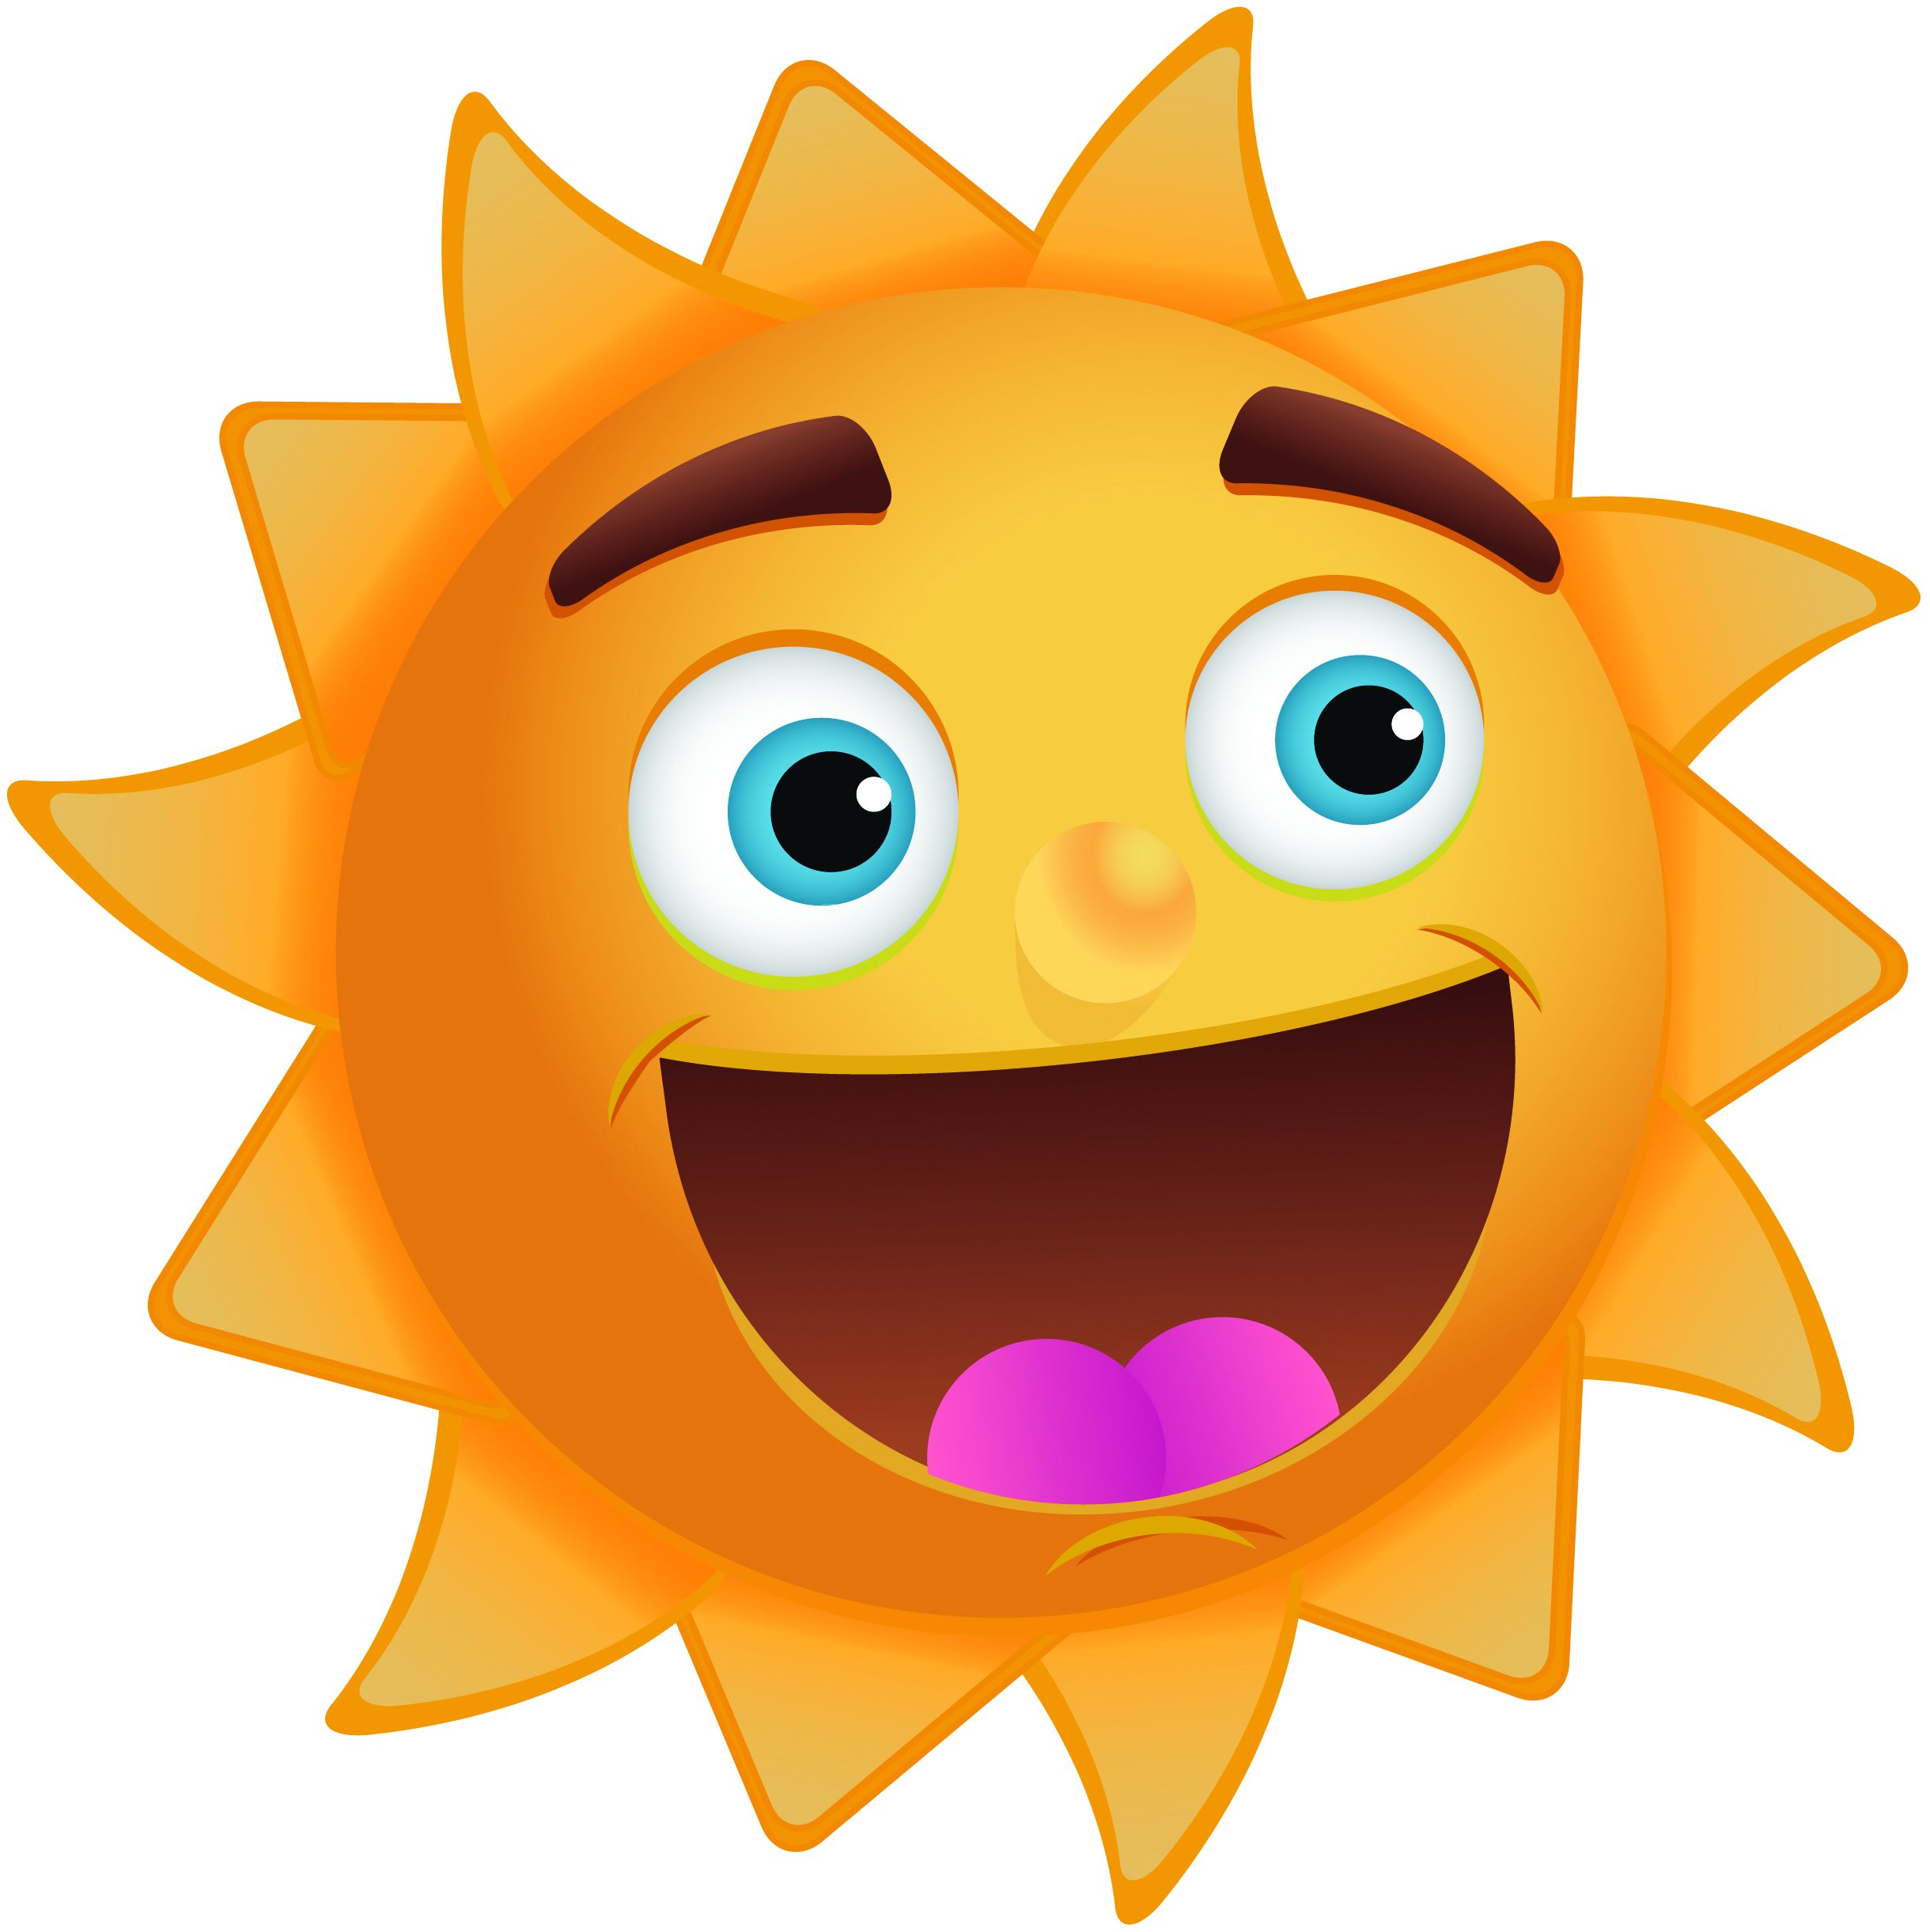 Smiling Sun Clip Art - Free Clipart Images